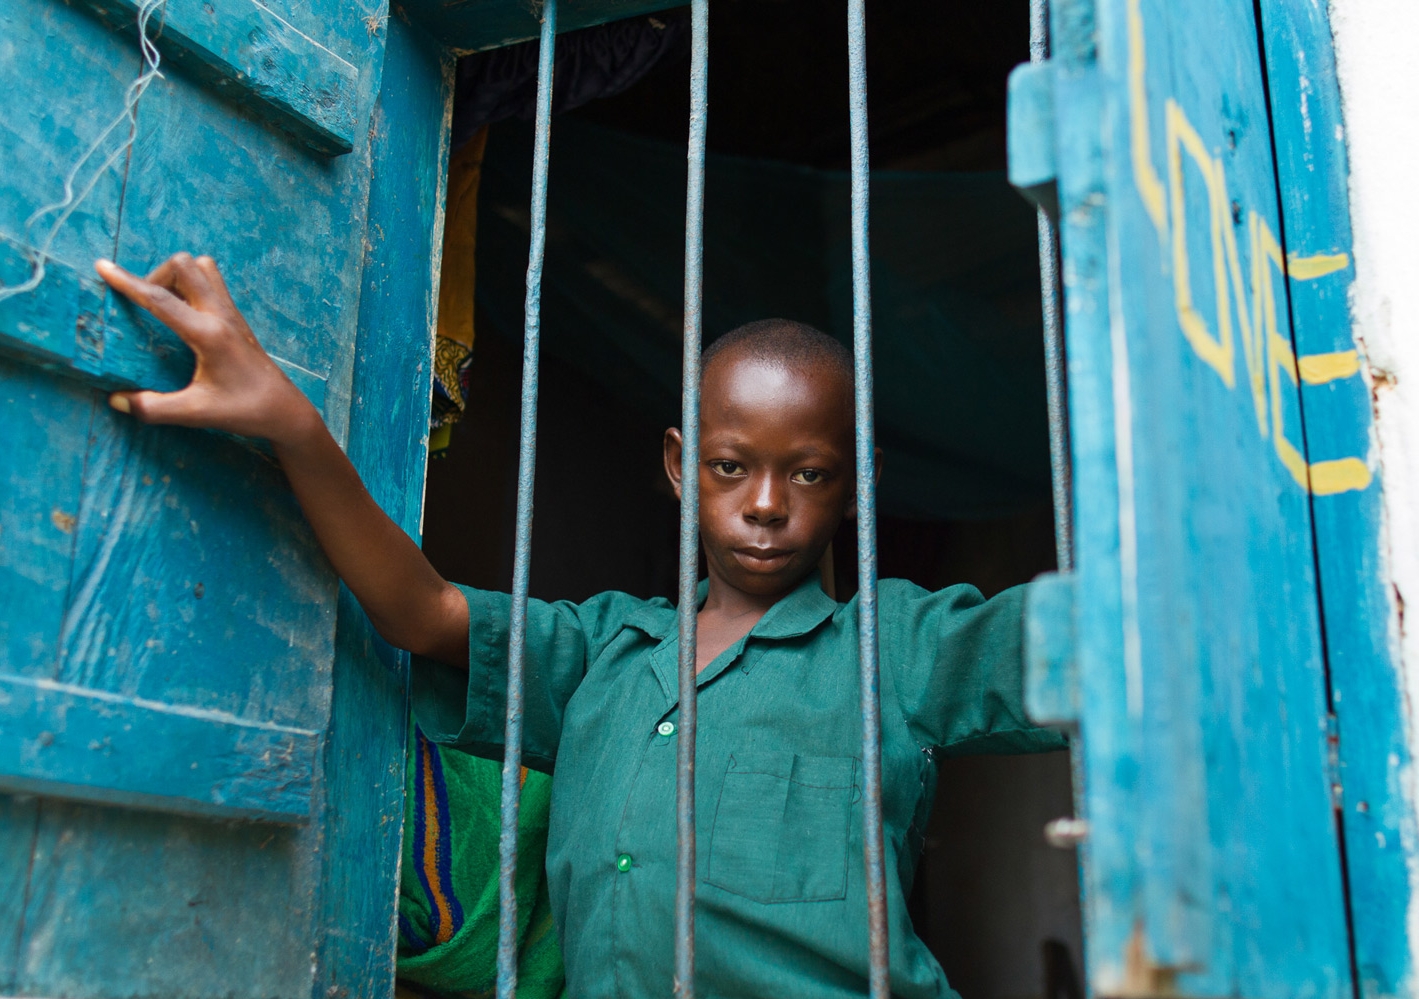  OPEN THIS PUBLICATION  UNICEF SIERRA LEONE: ABU'S STORY  